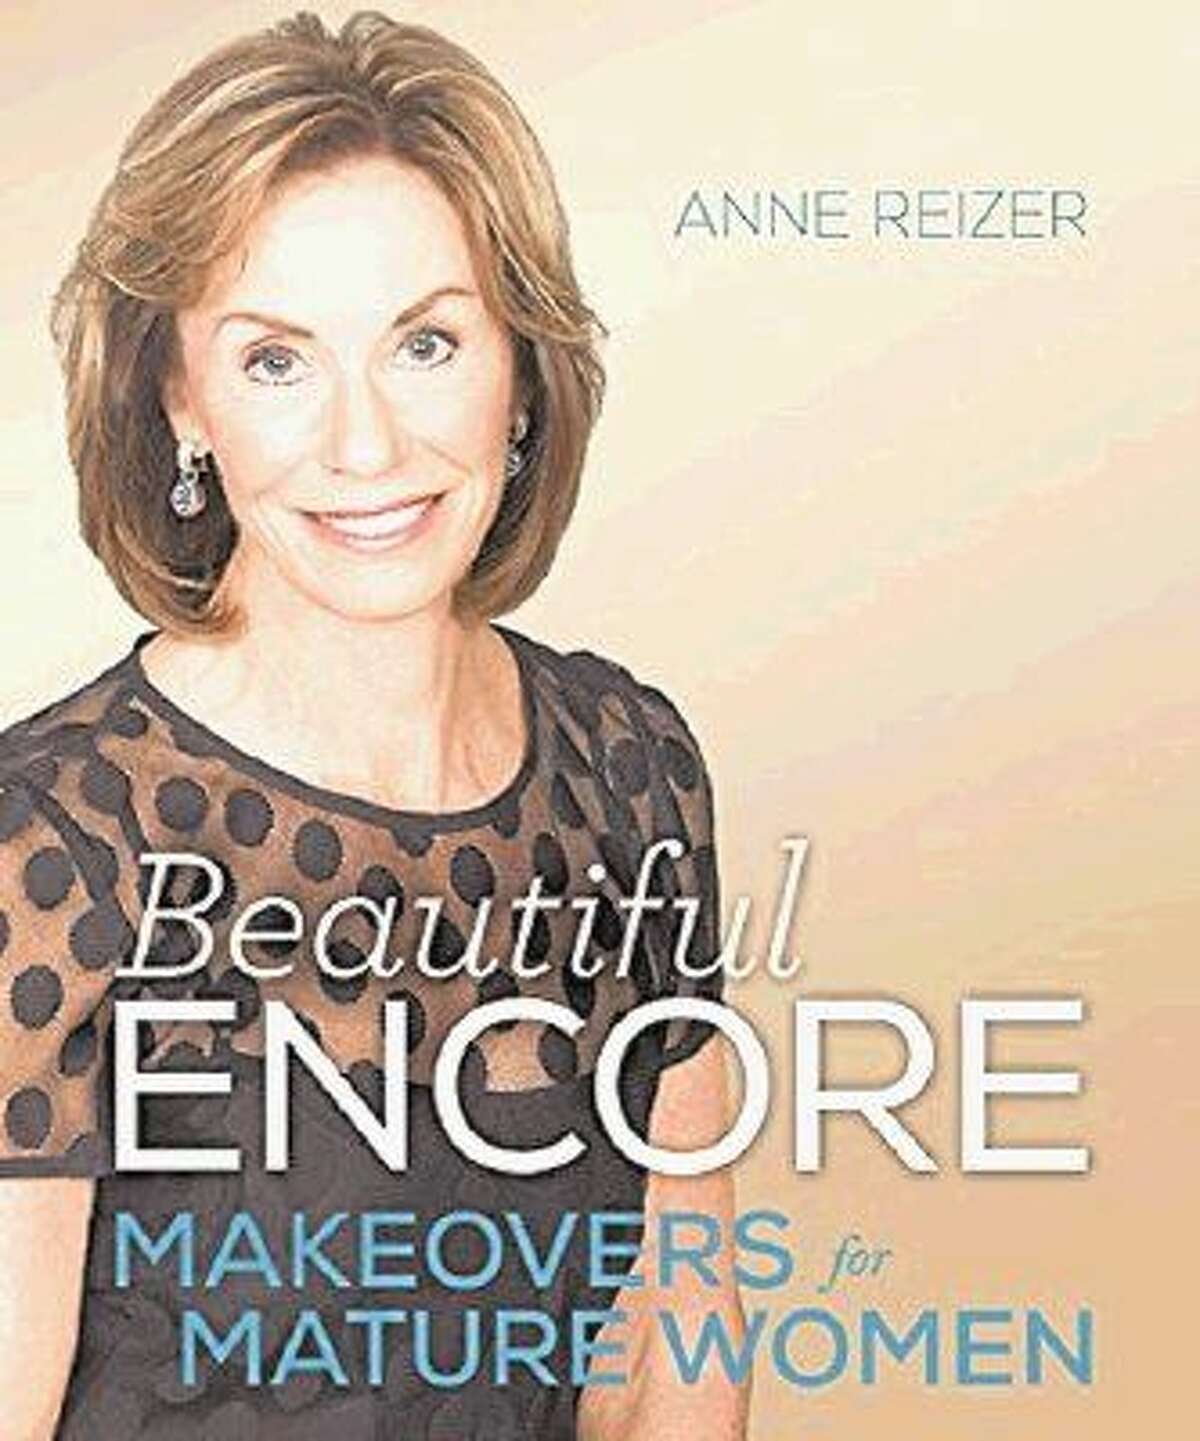 Beautiful Encore' author inspires mature, true beauty